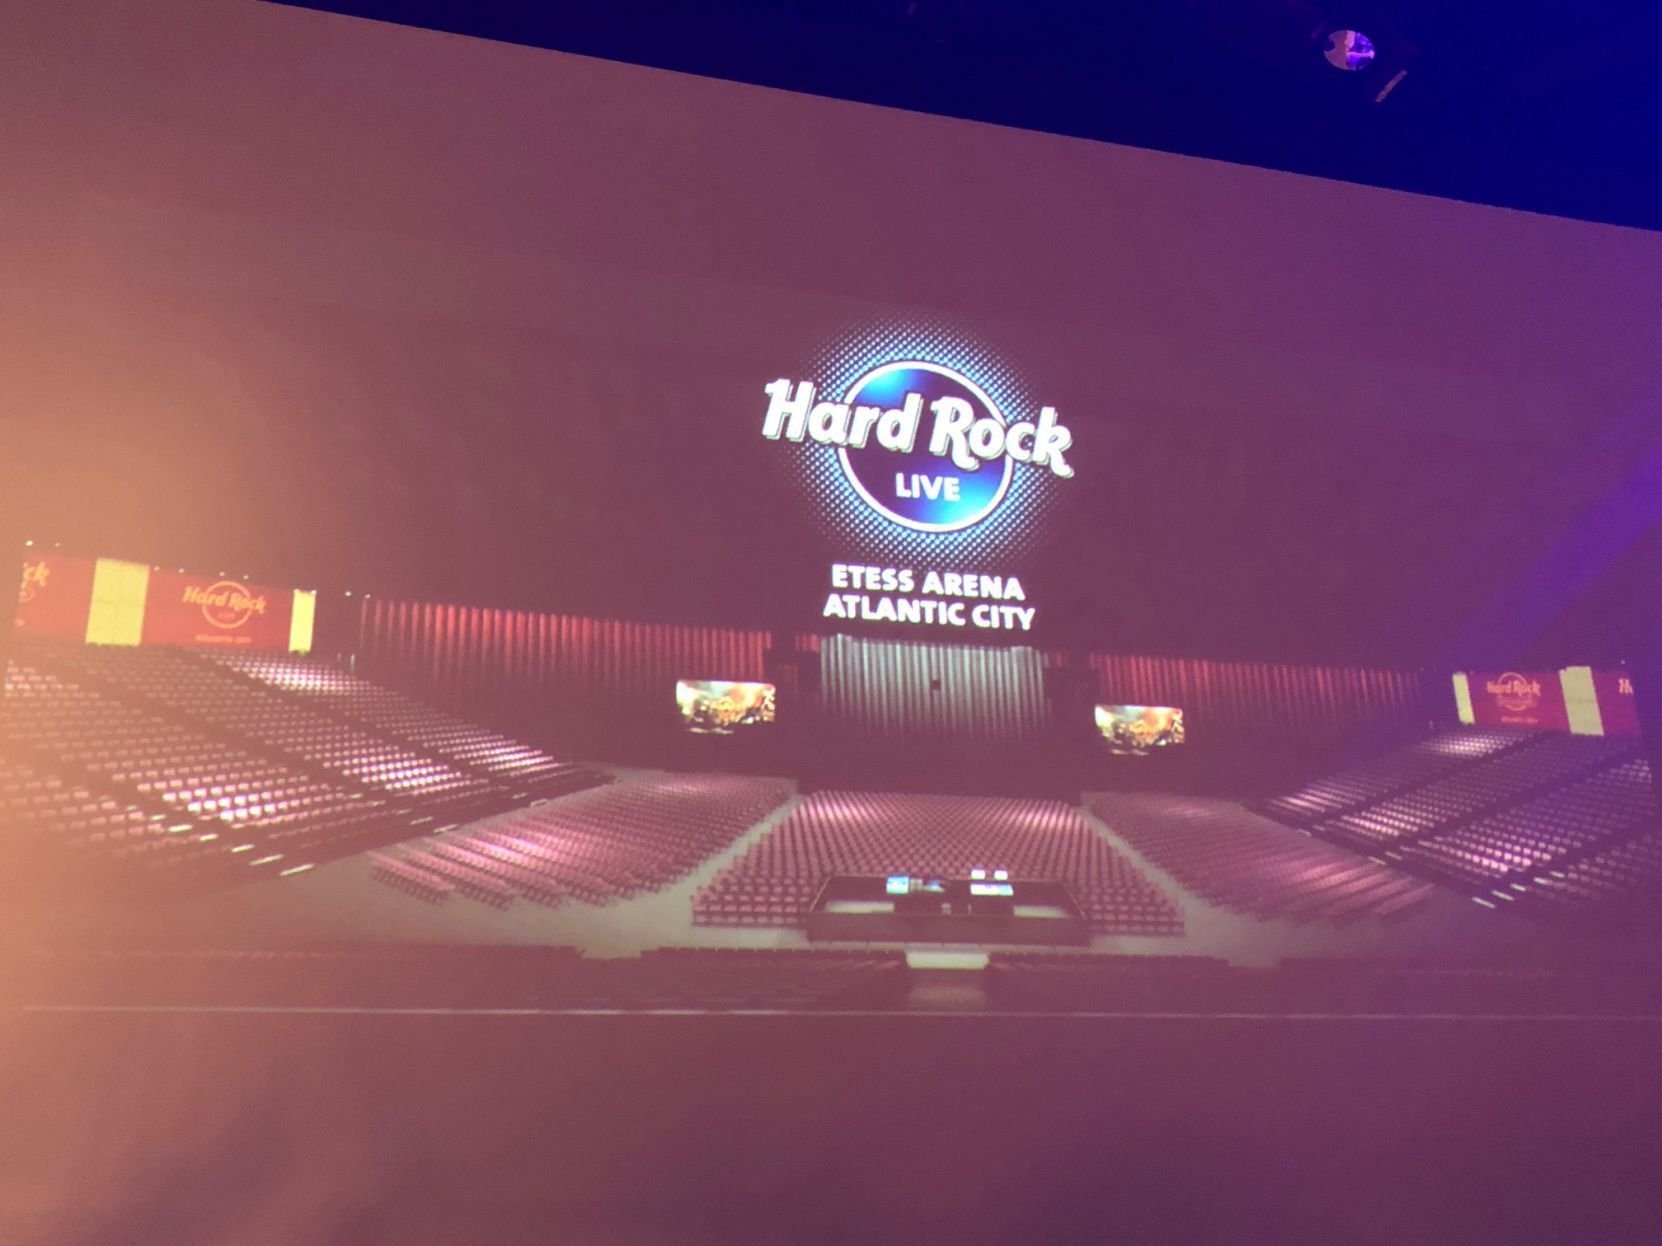 events in hard rock casino atlantic city